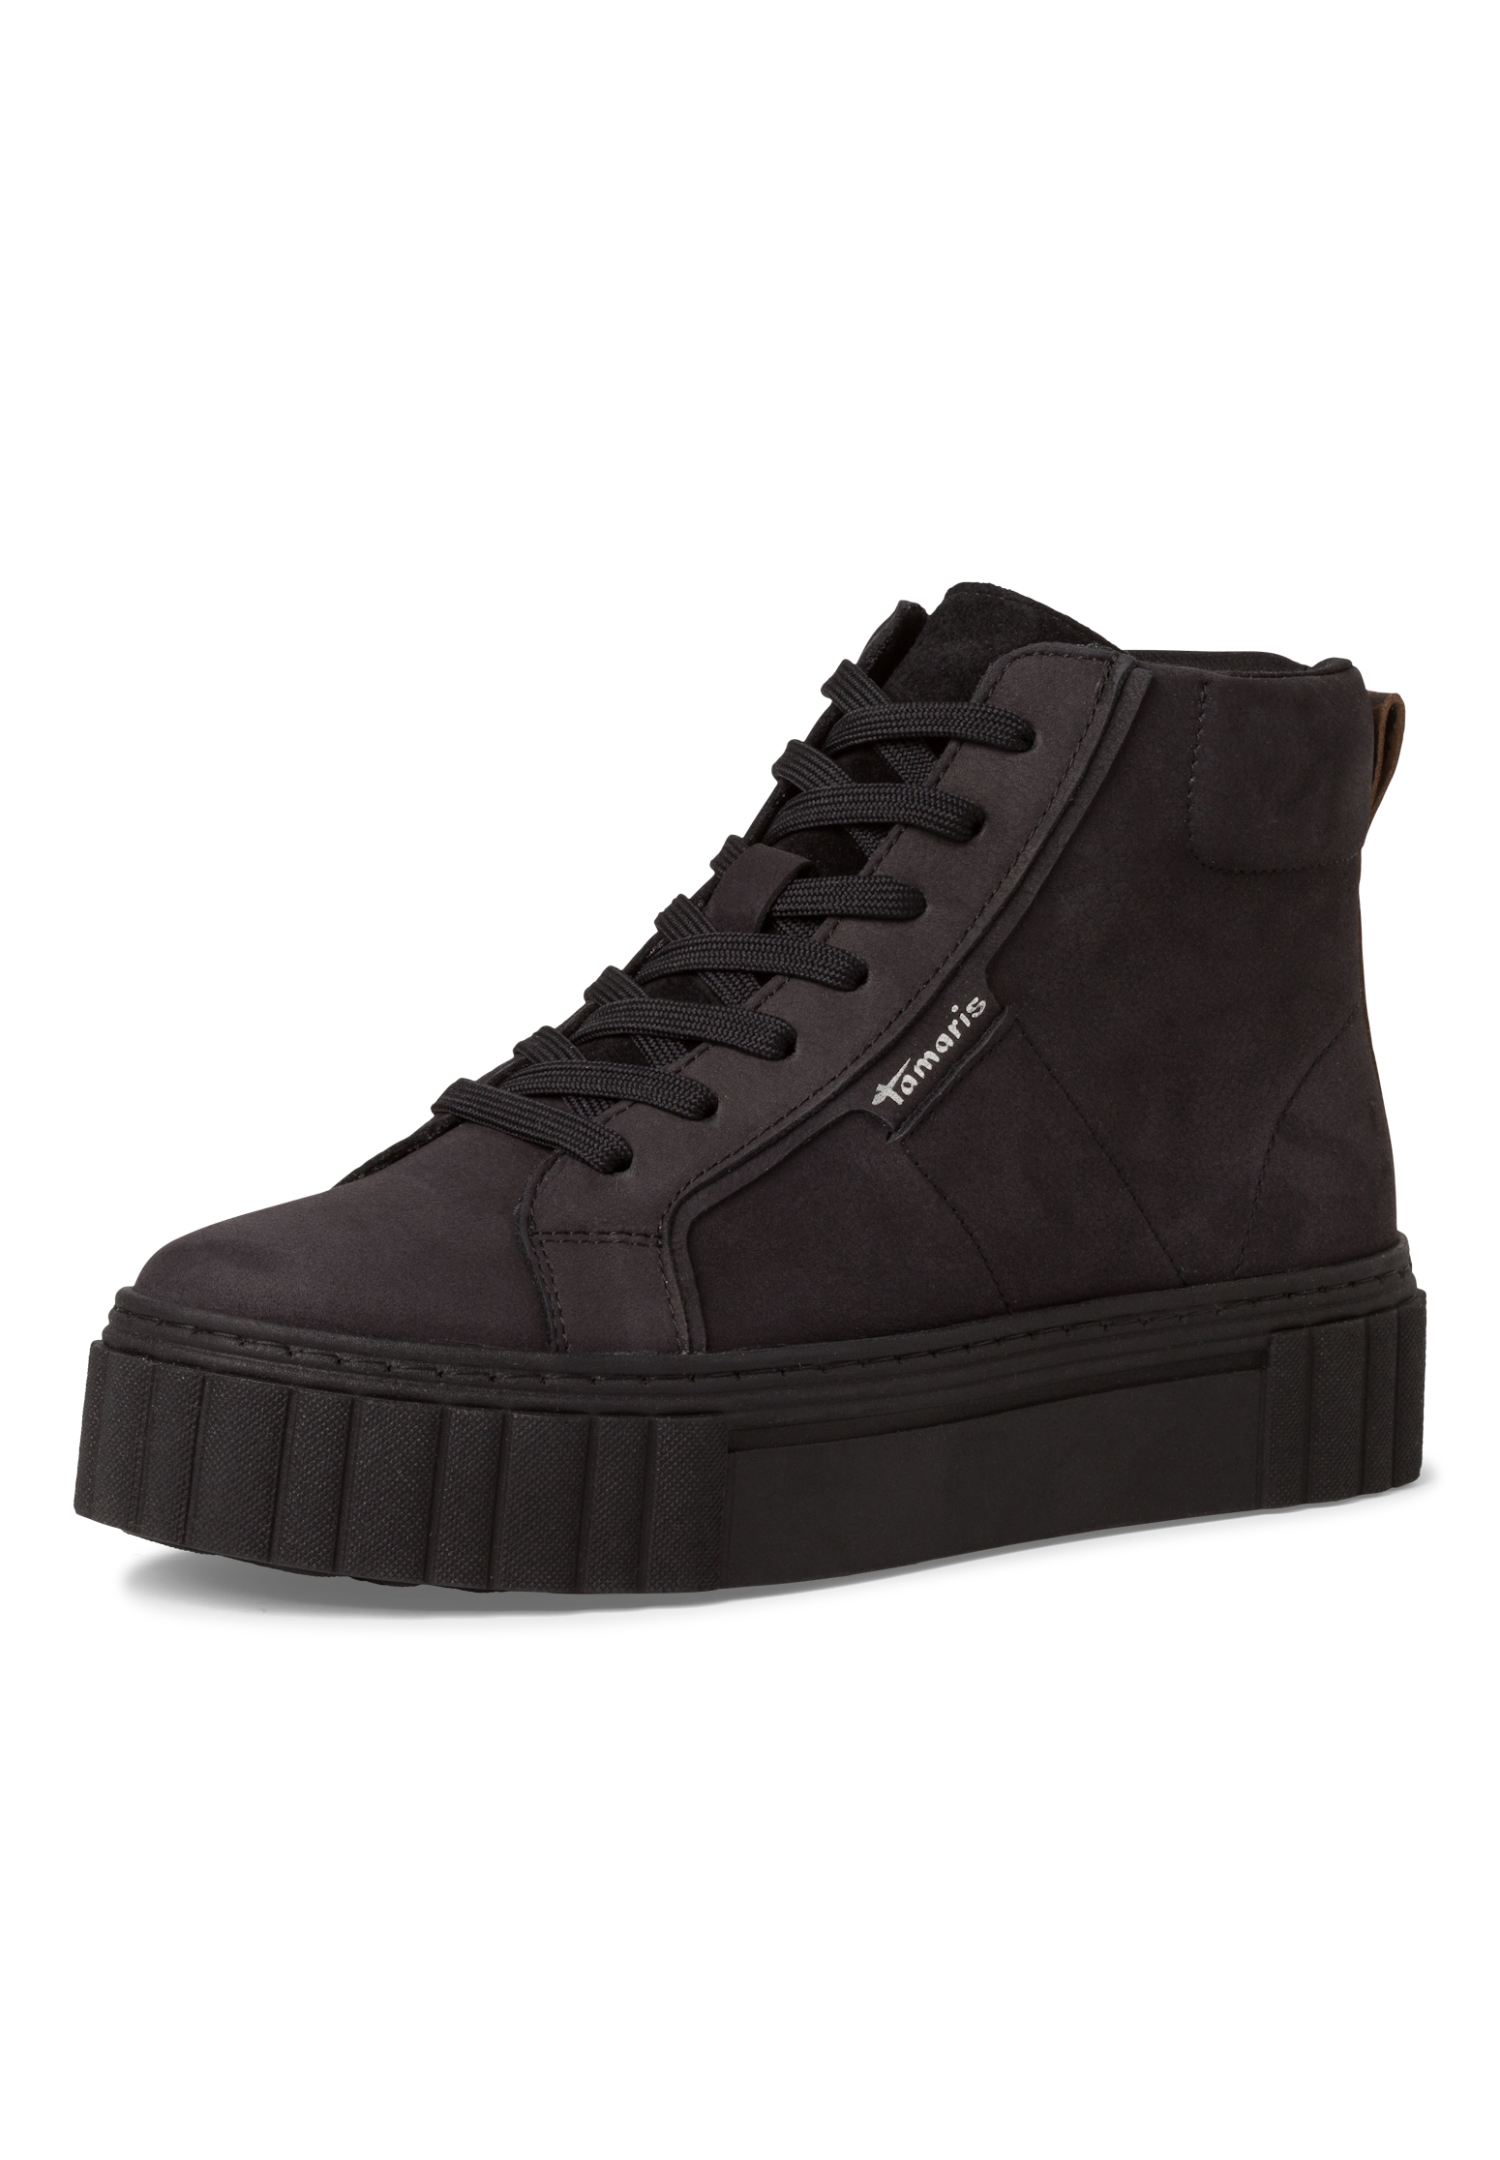 Tamaris Damen High-Top Sneaker Frauen Halbschuhe schwarz M2522741